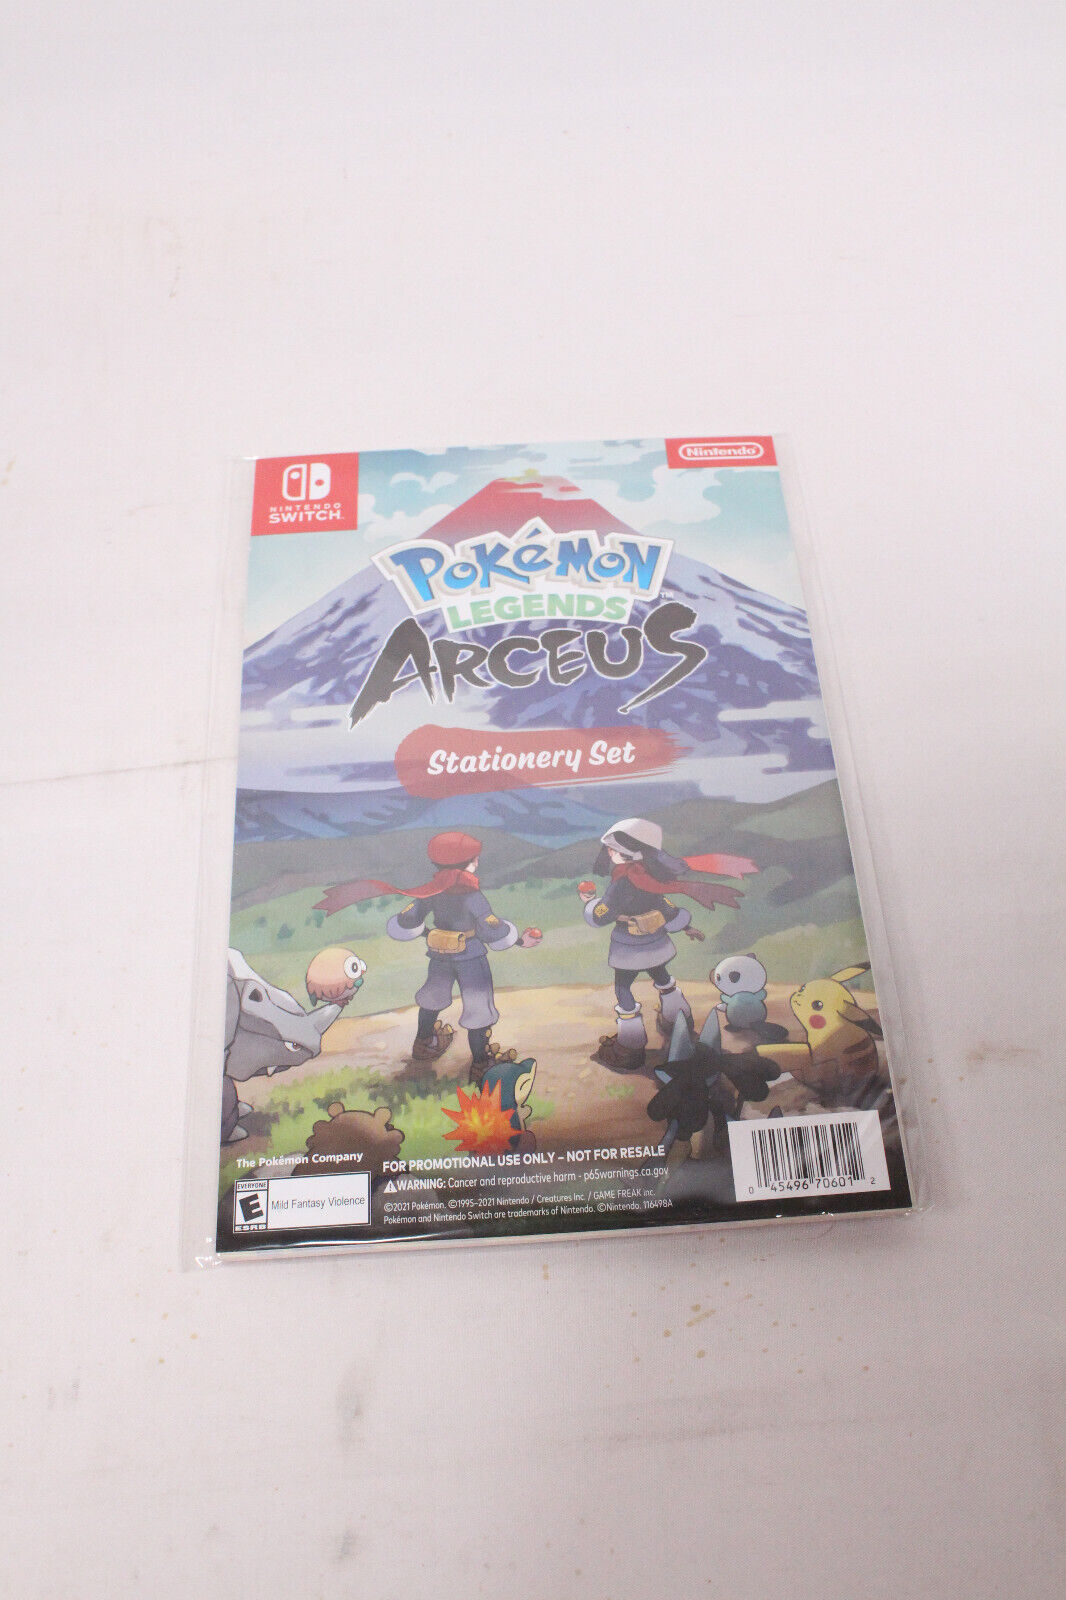 Nintendo Pokemon Legends Arceus Stationery Set - Target Promo Exclusive - 2022